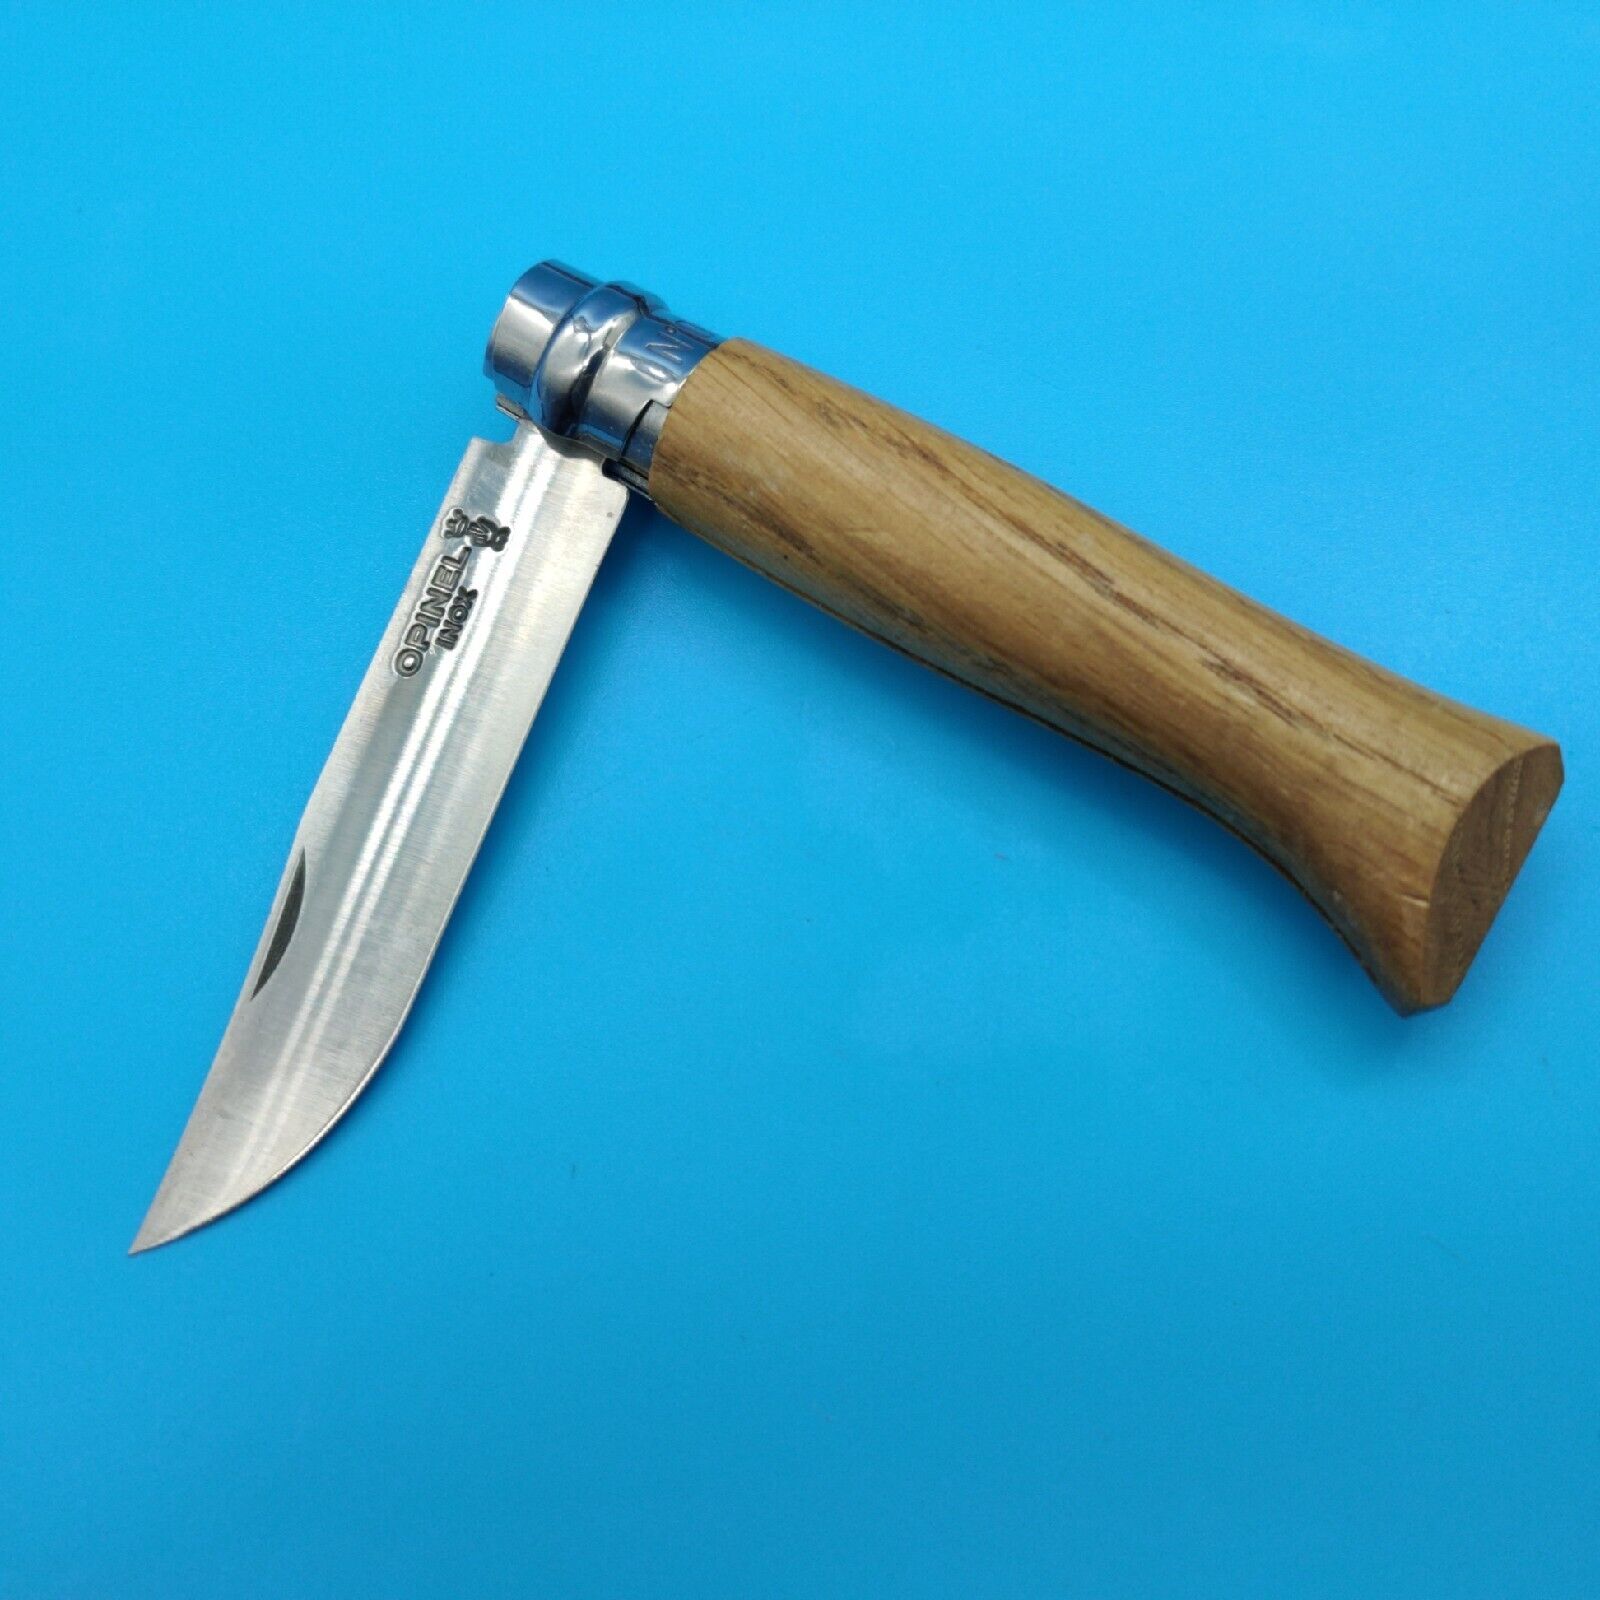 USED Opinel No. 08 INOX Stainless Steel Knife Light Wood Handle